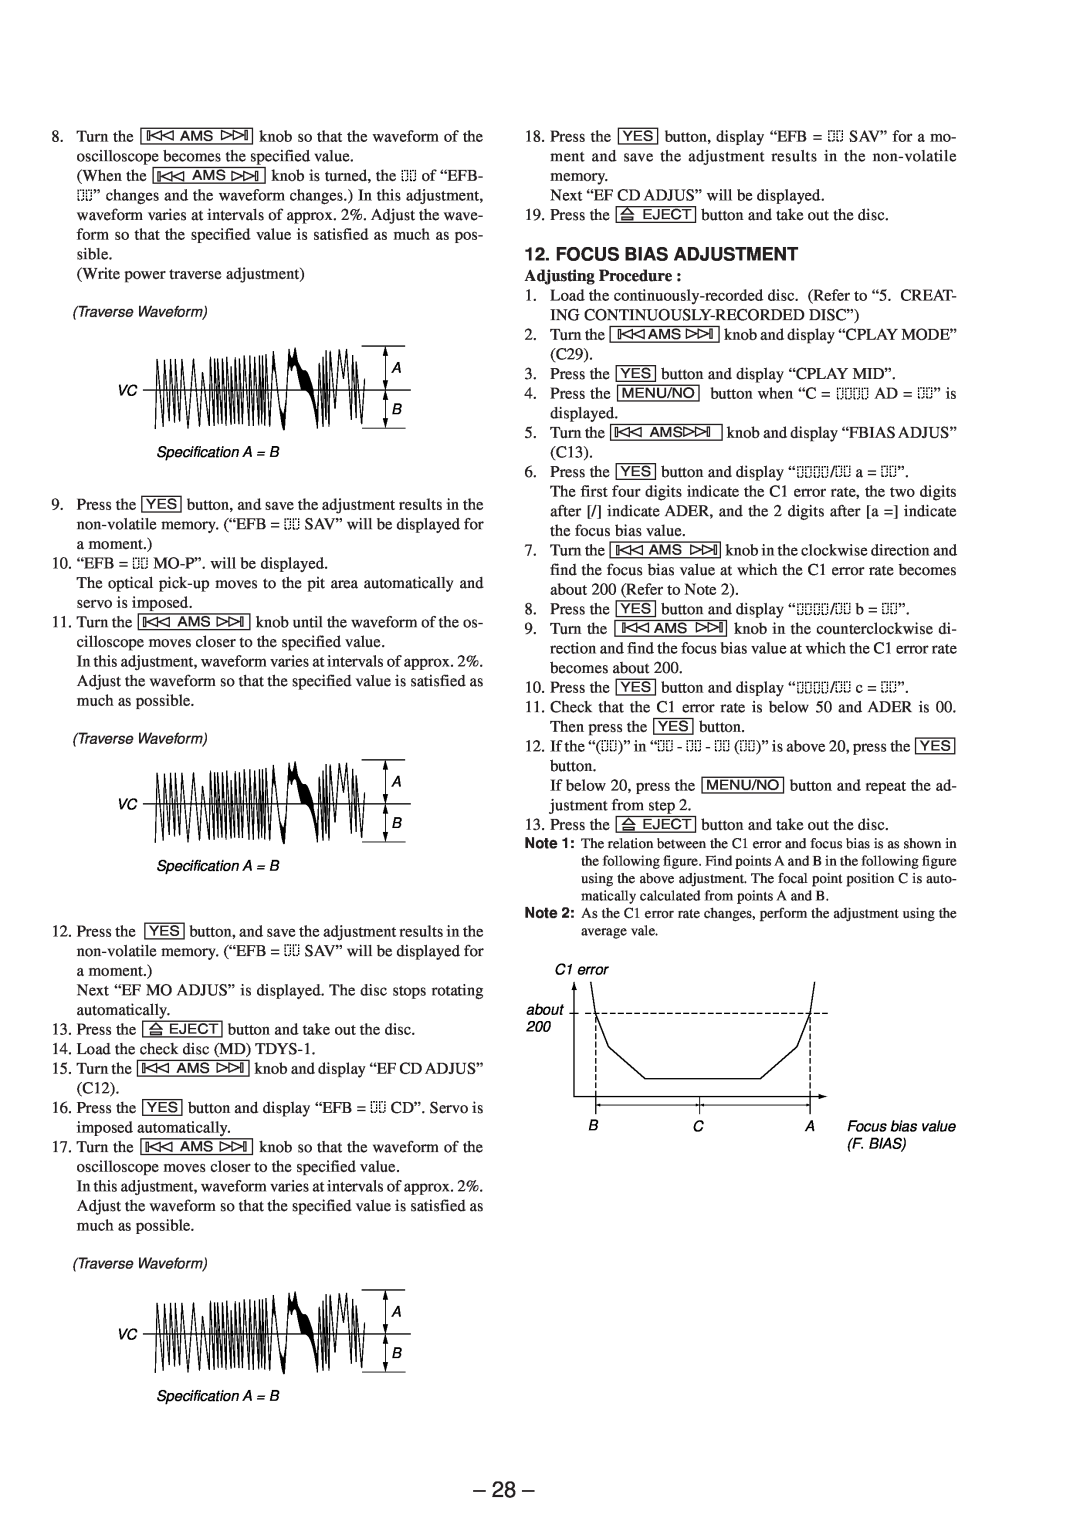 Sony MDS-JE530 service manual 28, Focus Bias Adjustment, Adjusting Procedure 